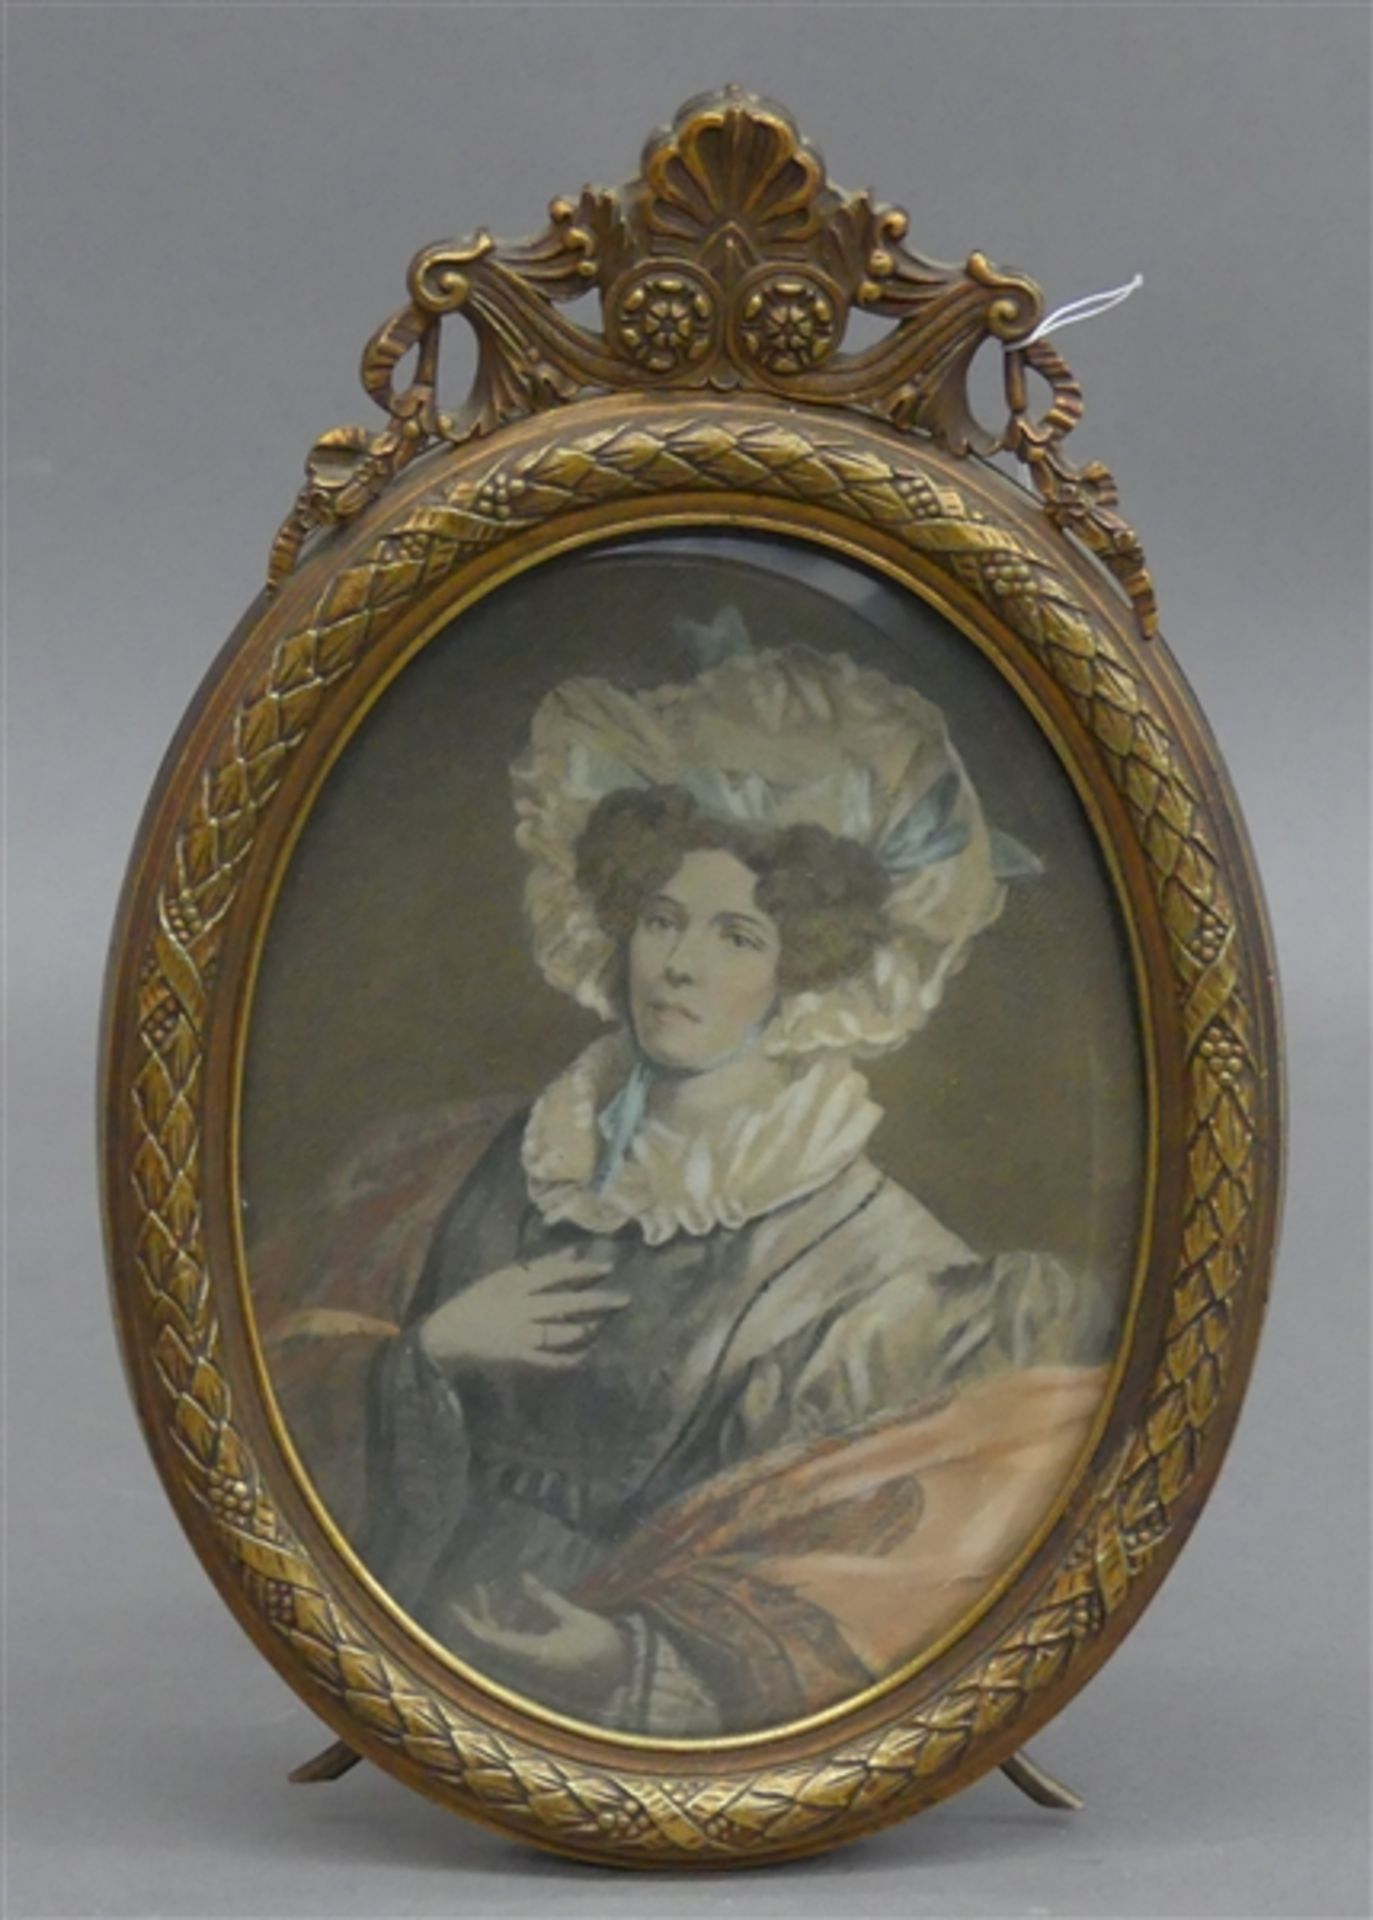 Aquarellminiatur auf Papier, vornehme Dame mit Kopfhaube, ovaler Bildausschnitt, 14,5 x 10,5 cm, um